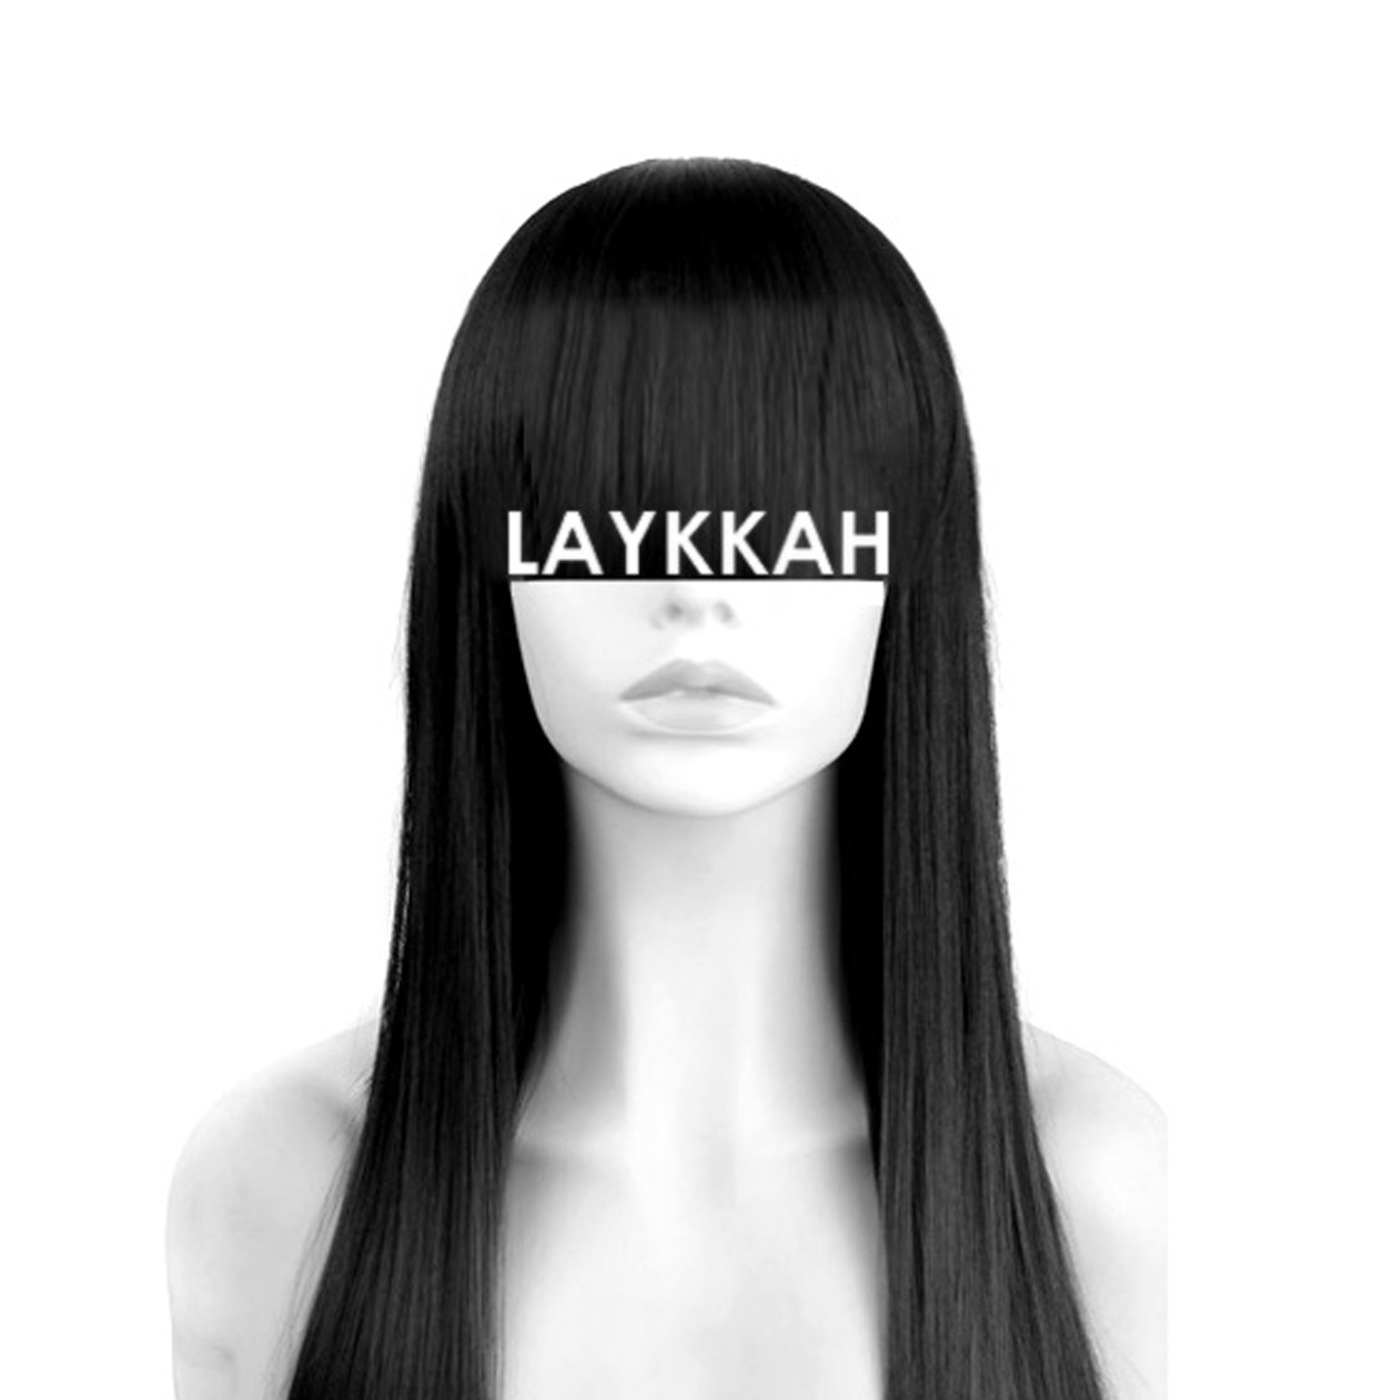 Laykkah's Podcast